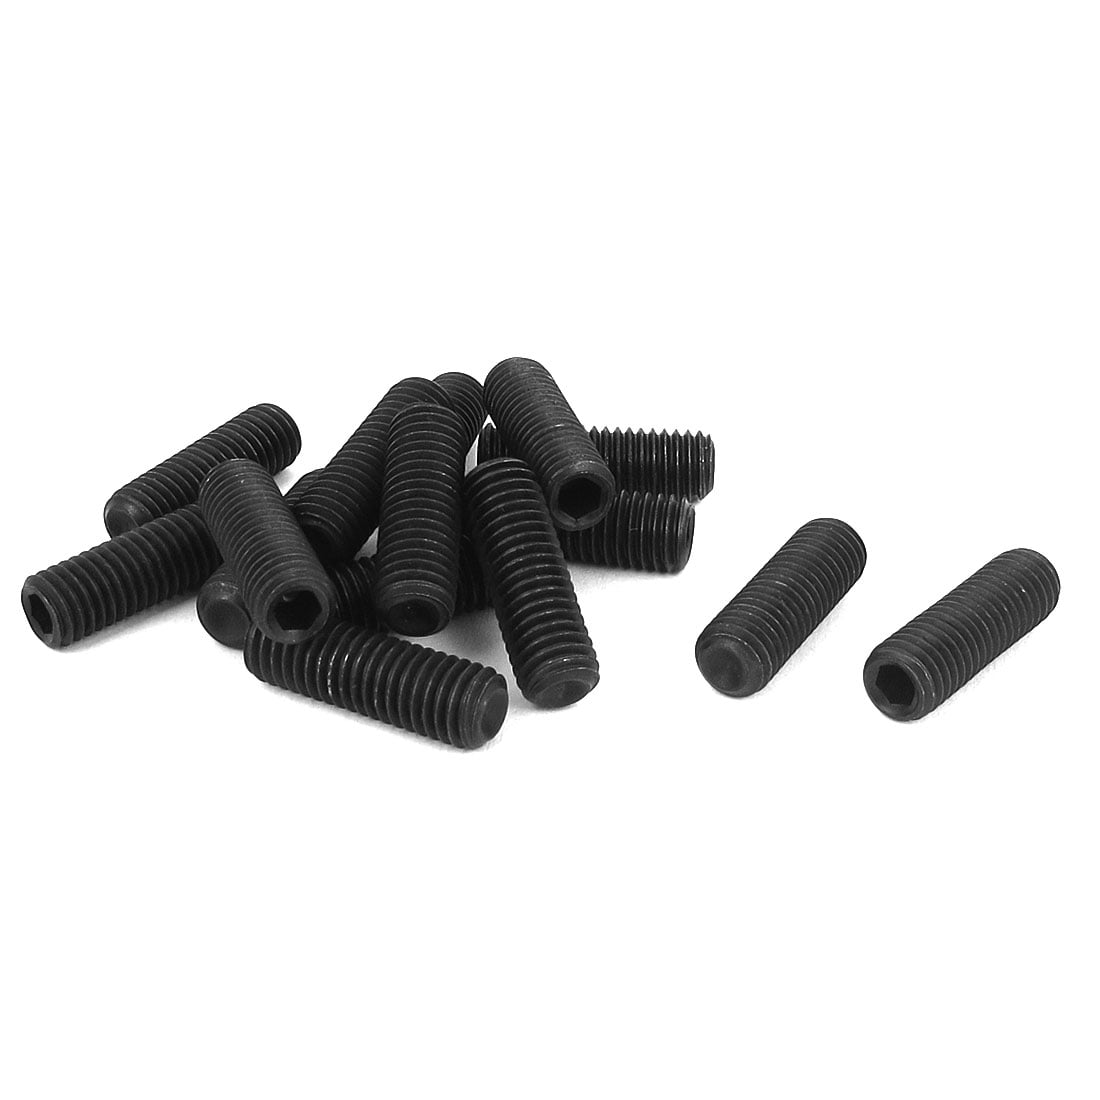 M3x5mm 0.5mm Pitch 12.9 Alloy Steel Hex Socket Set Cone Point Grub Screws 50pcs